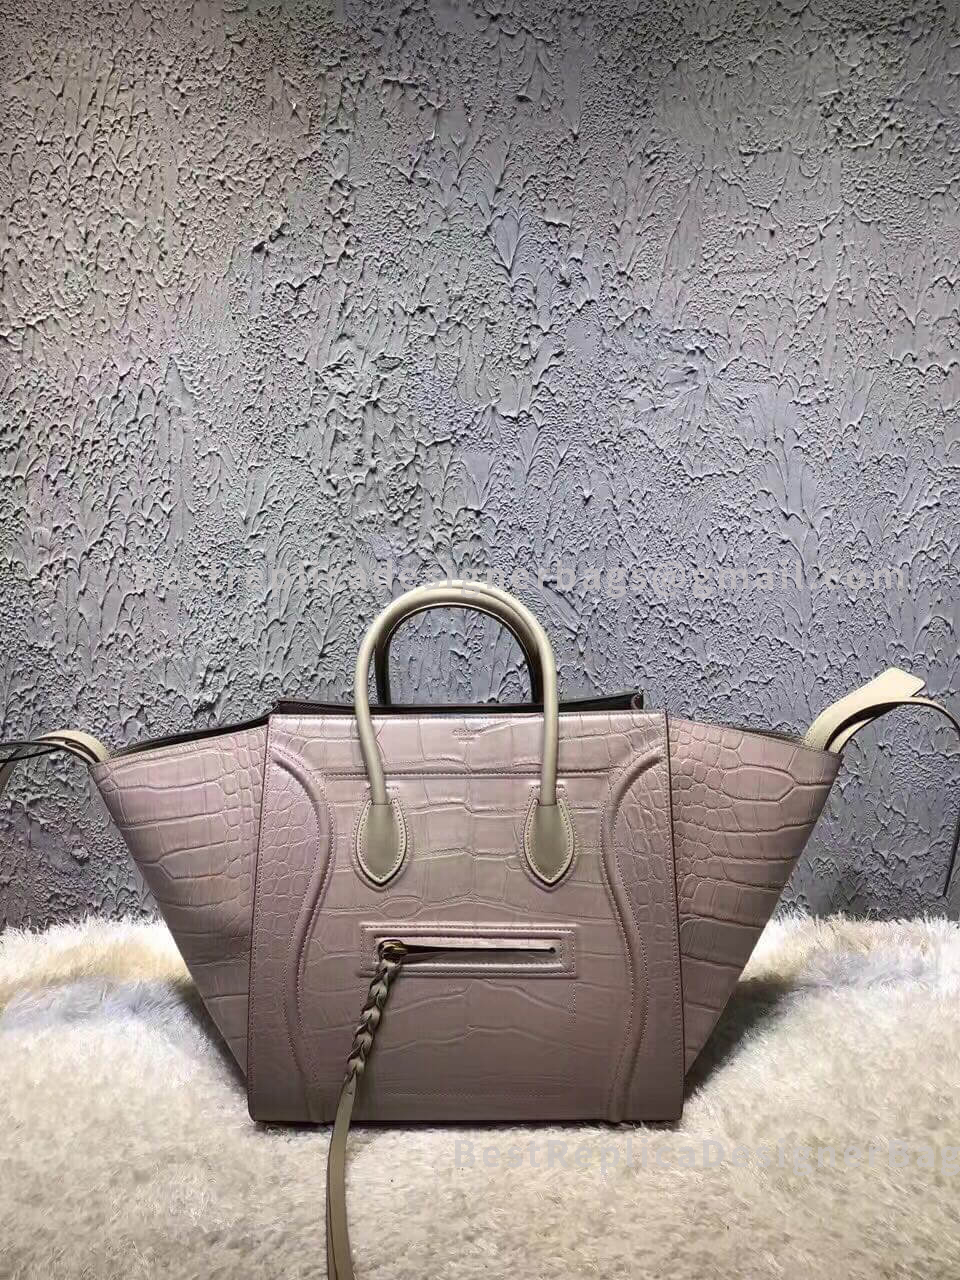 Celine Luggage Phantom Bag In Nude Croc Embossed Leather